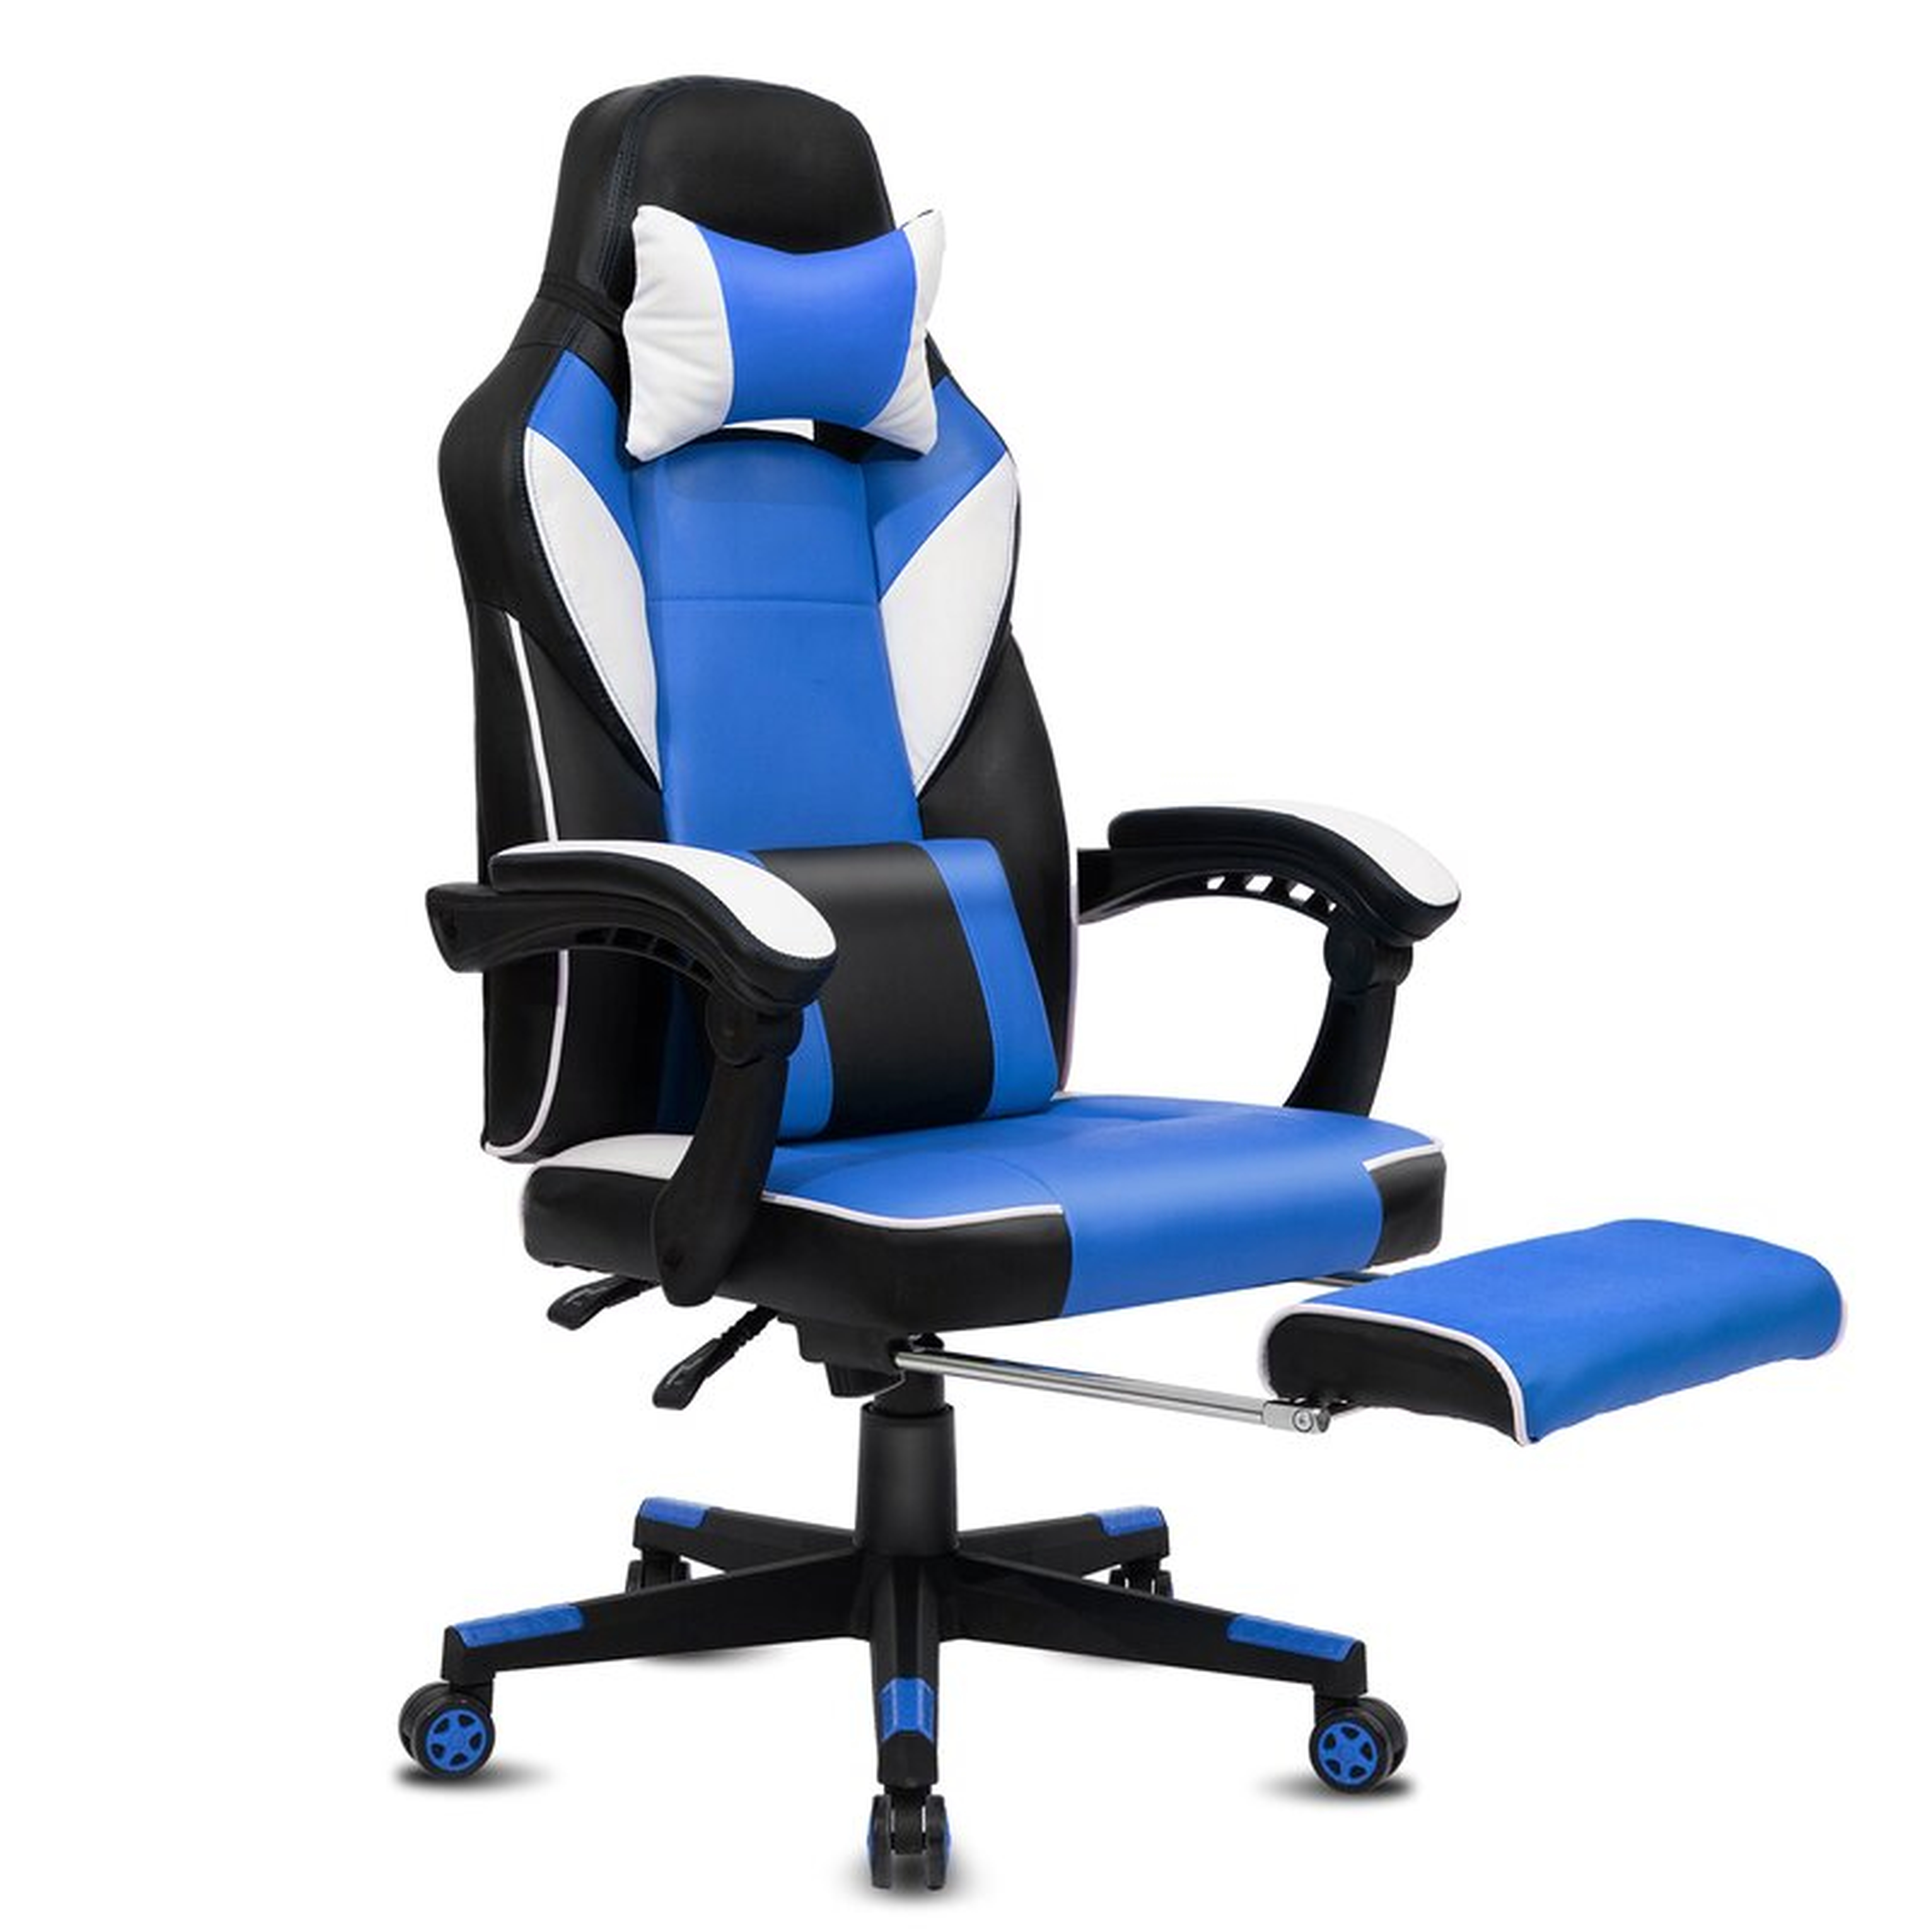 High-Back PC & Racing Game Chair, Blue - Wayfair